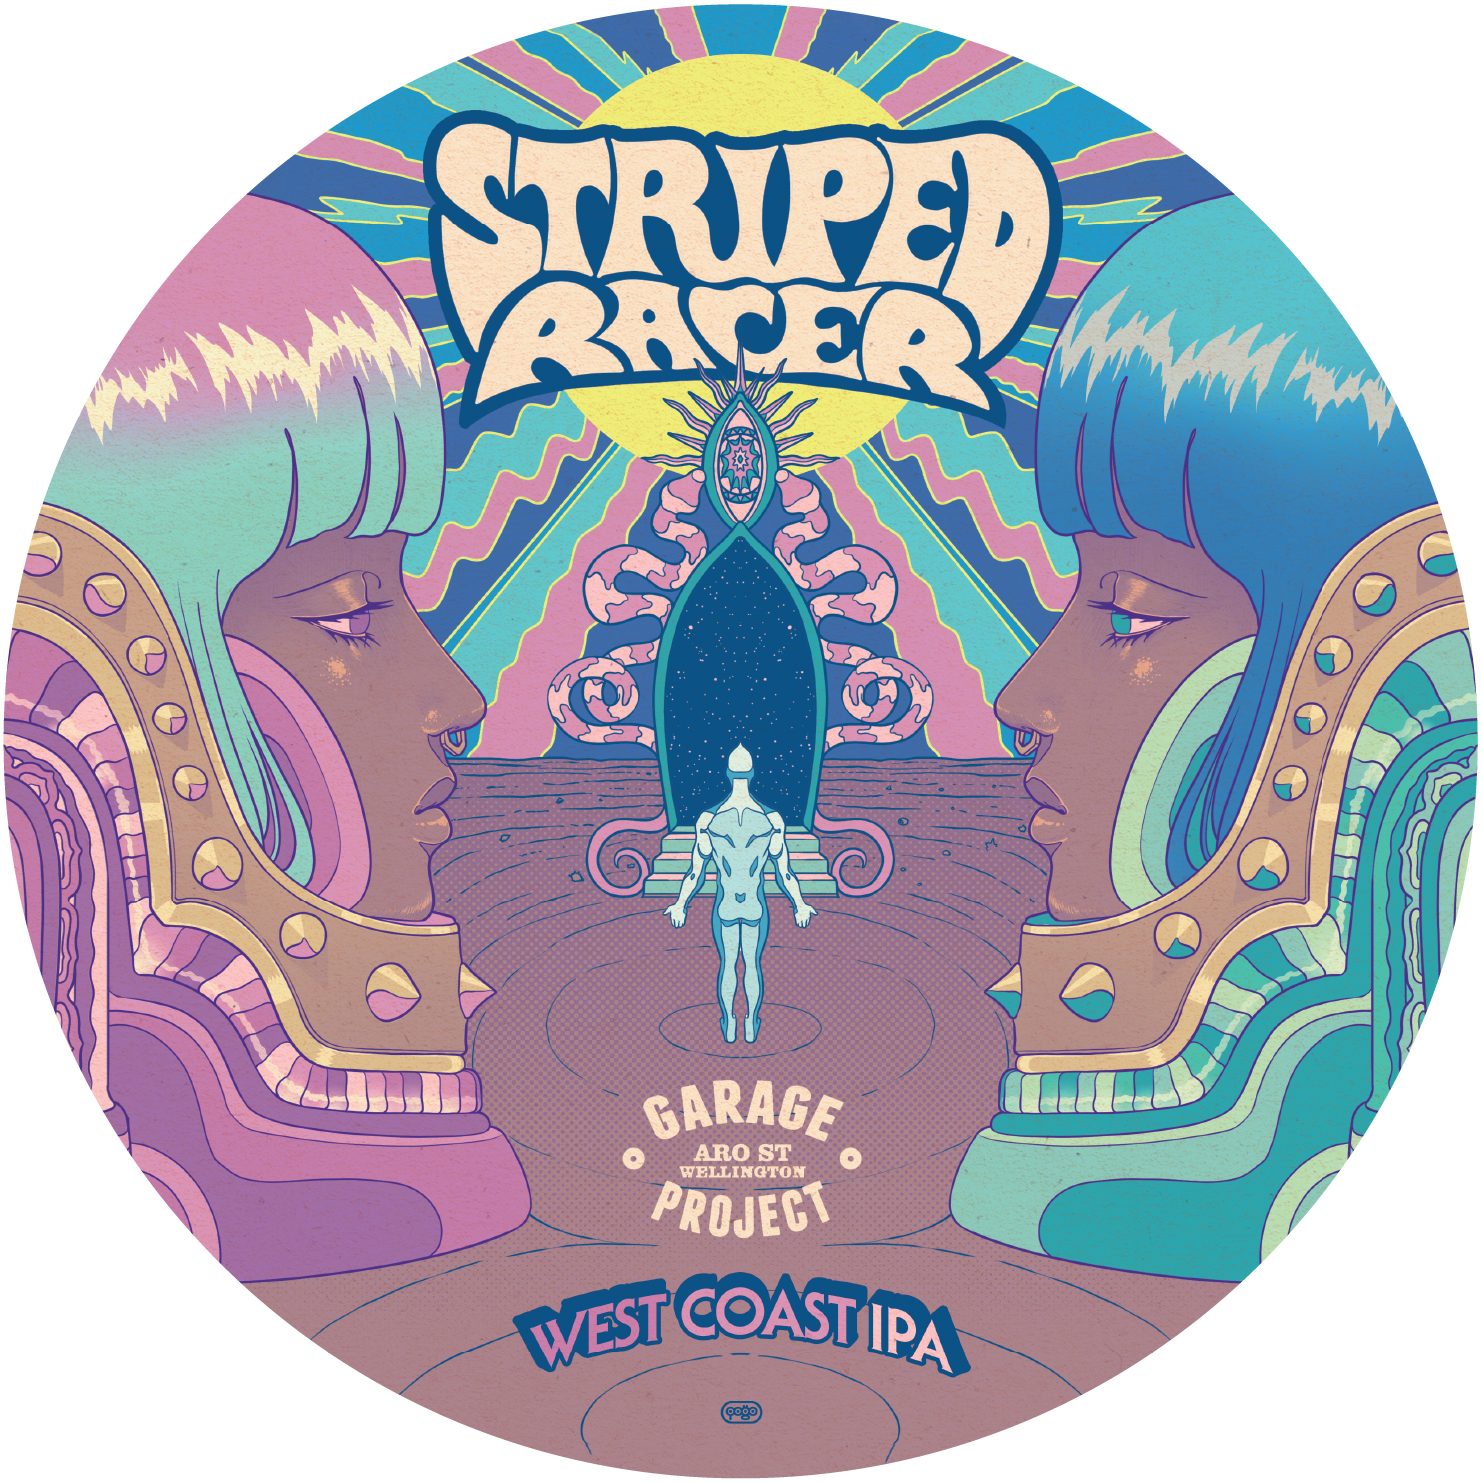 Striped Racer tap badge